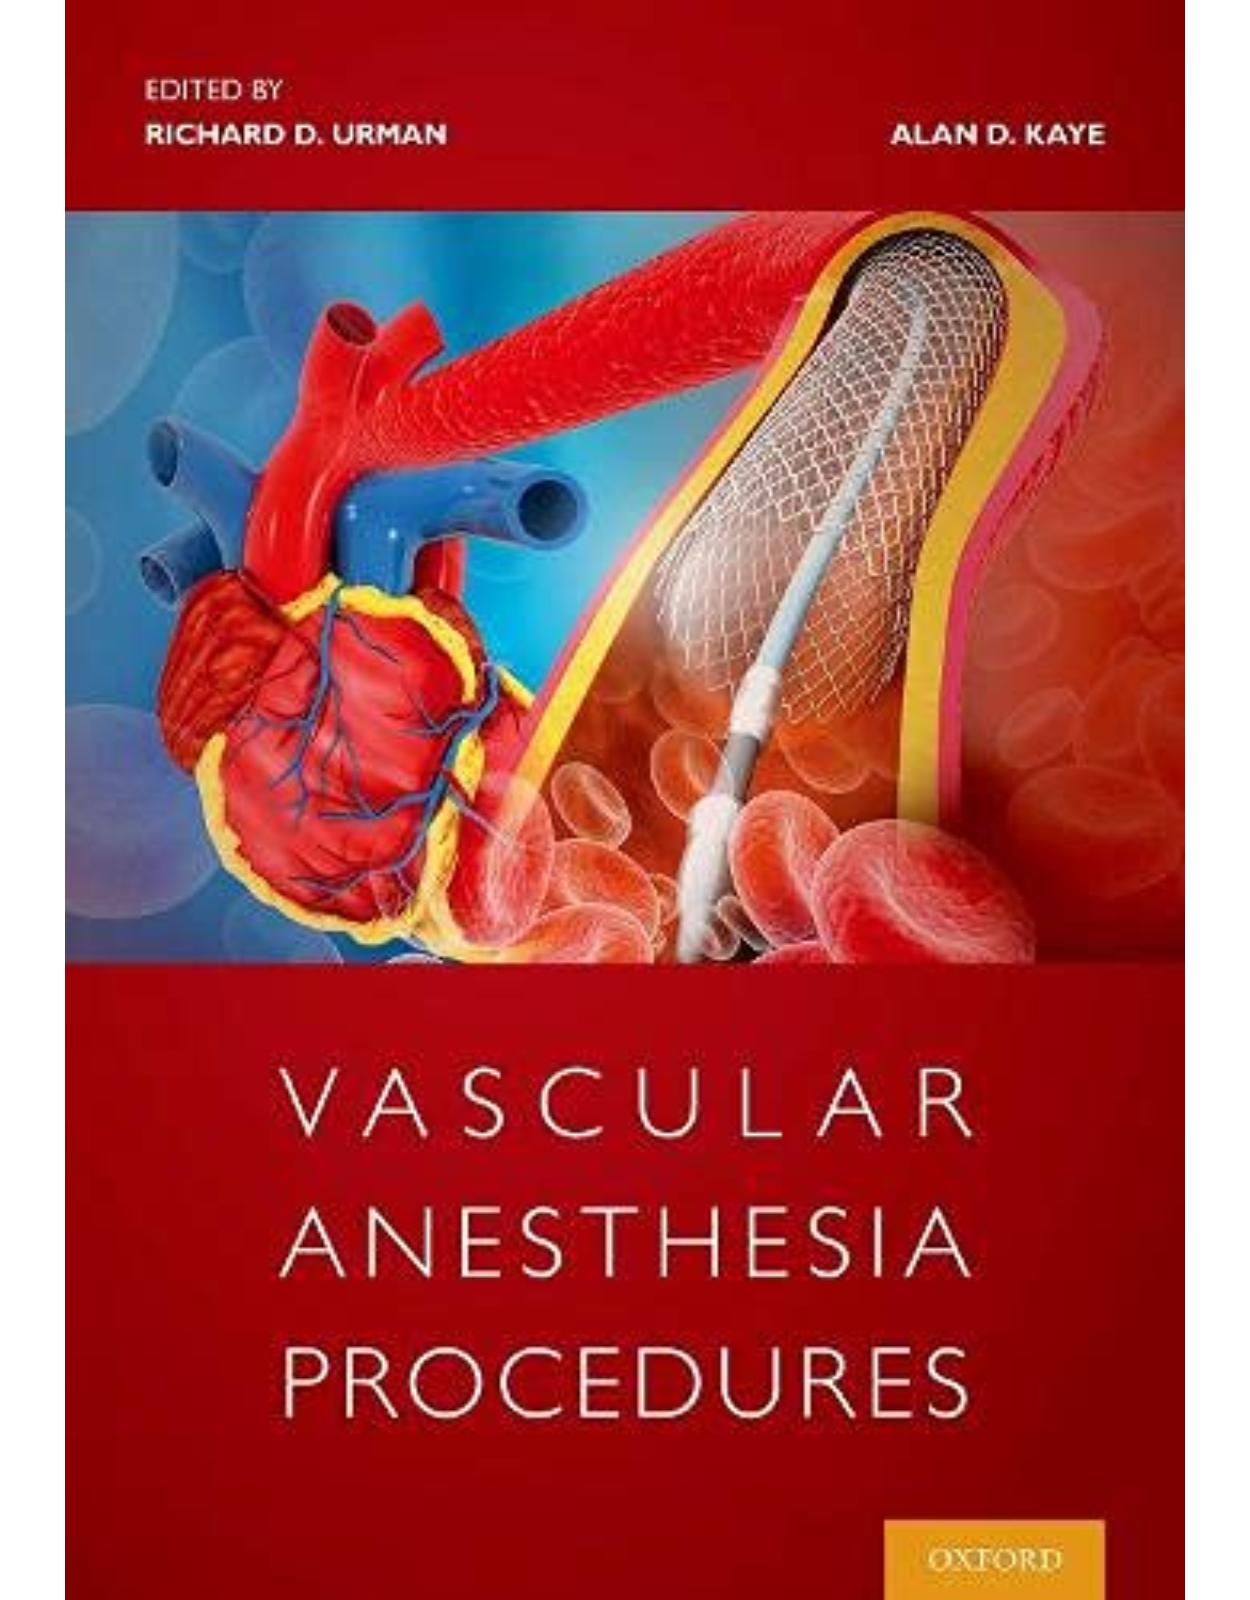 Vascular Anesthesia Procedures